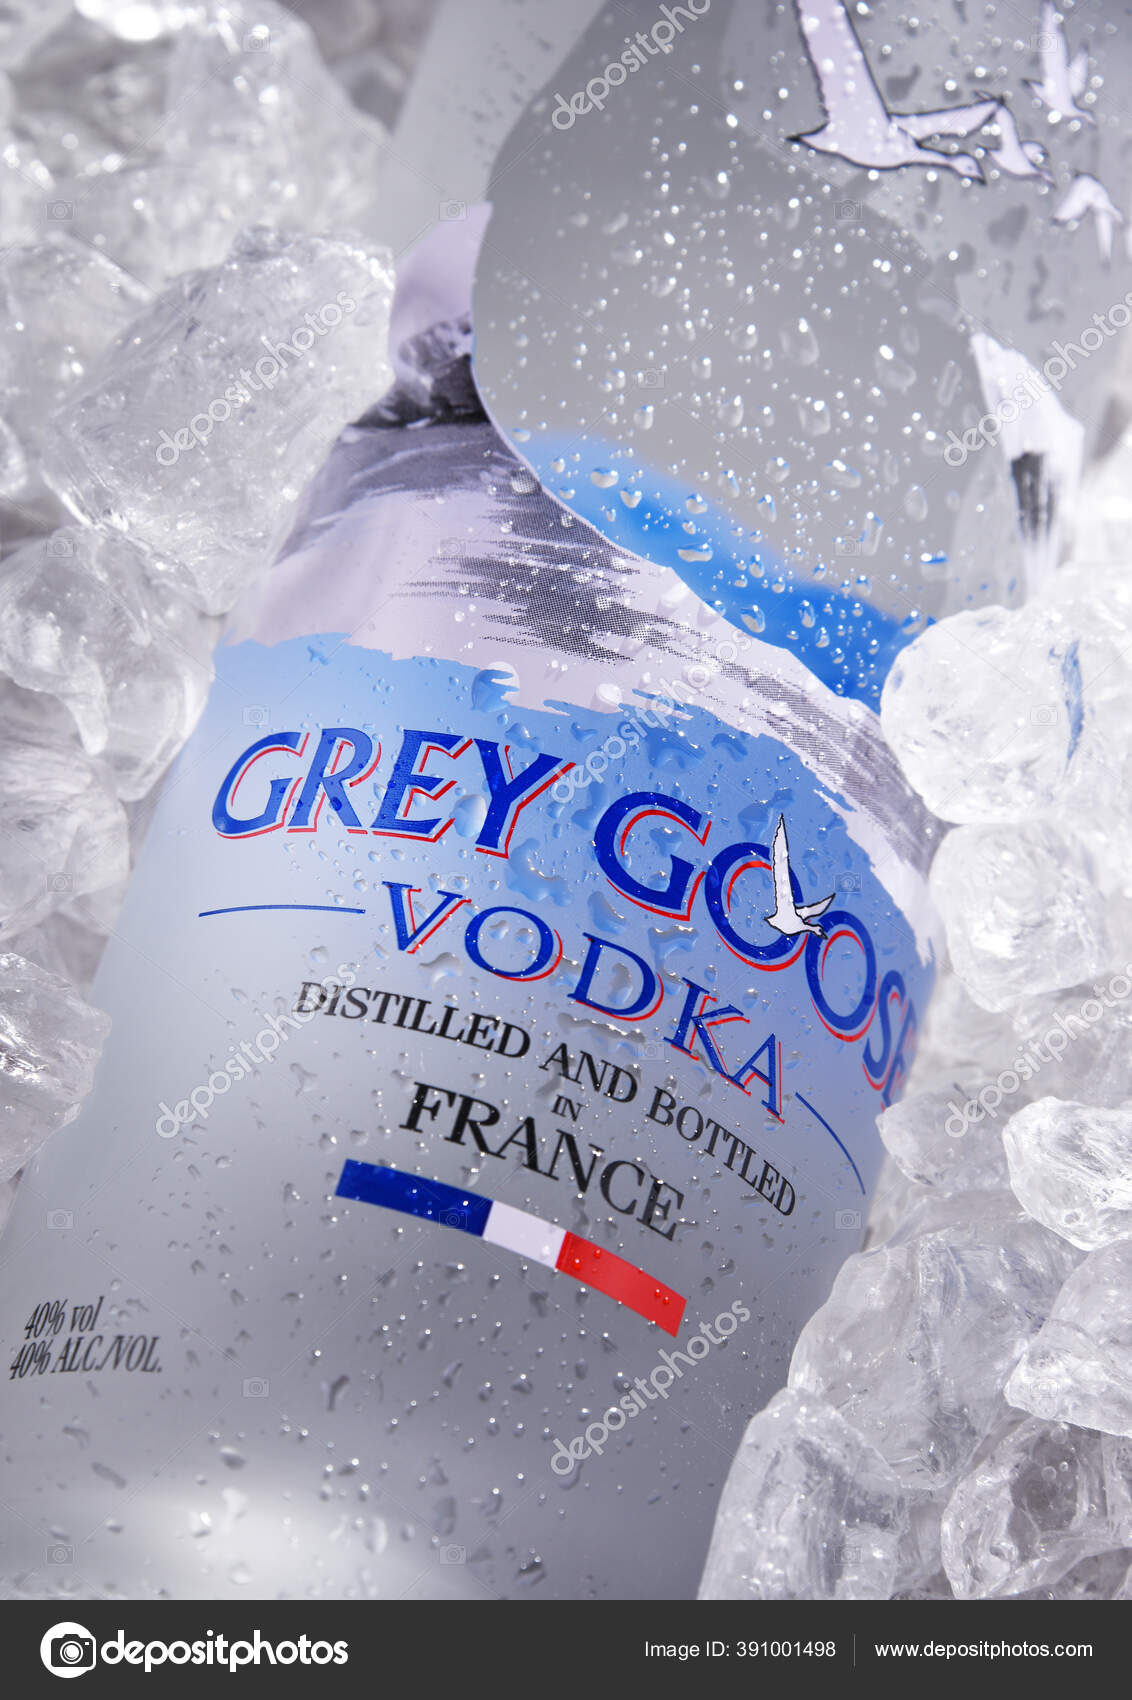 Poznan Pol Jul 2020 Bottle Grey Goose Brand French Vodka – Stock Editorial  Photo © monticello #391001498